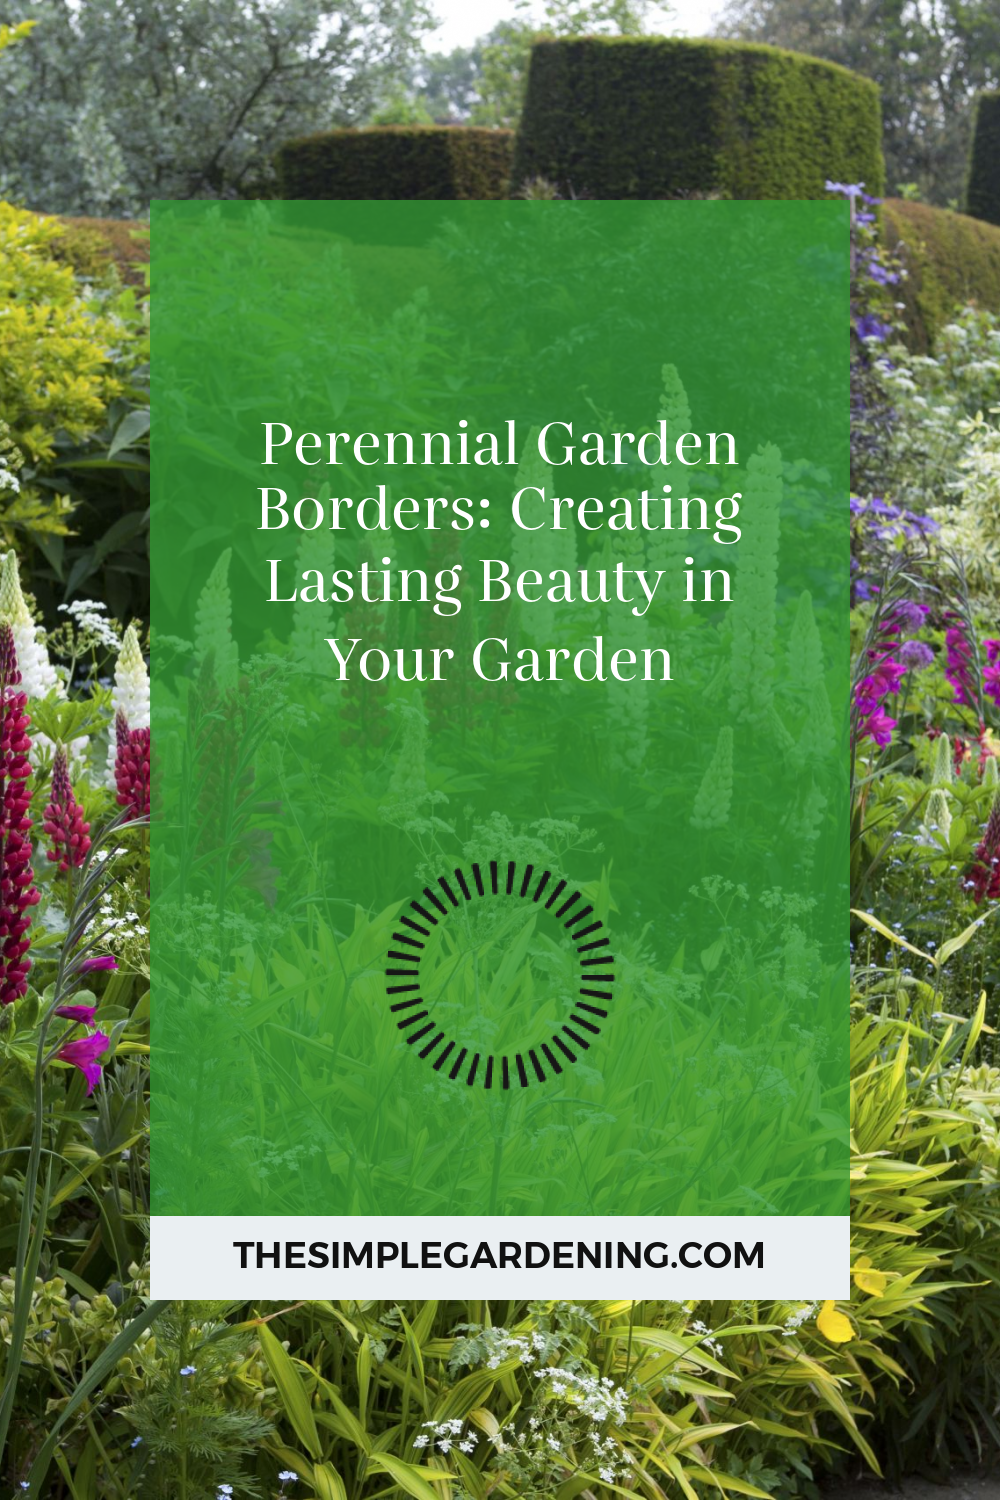 Perennial Garden Borders: Creating Lasting Beauty in Your Garden